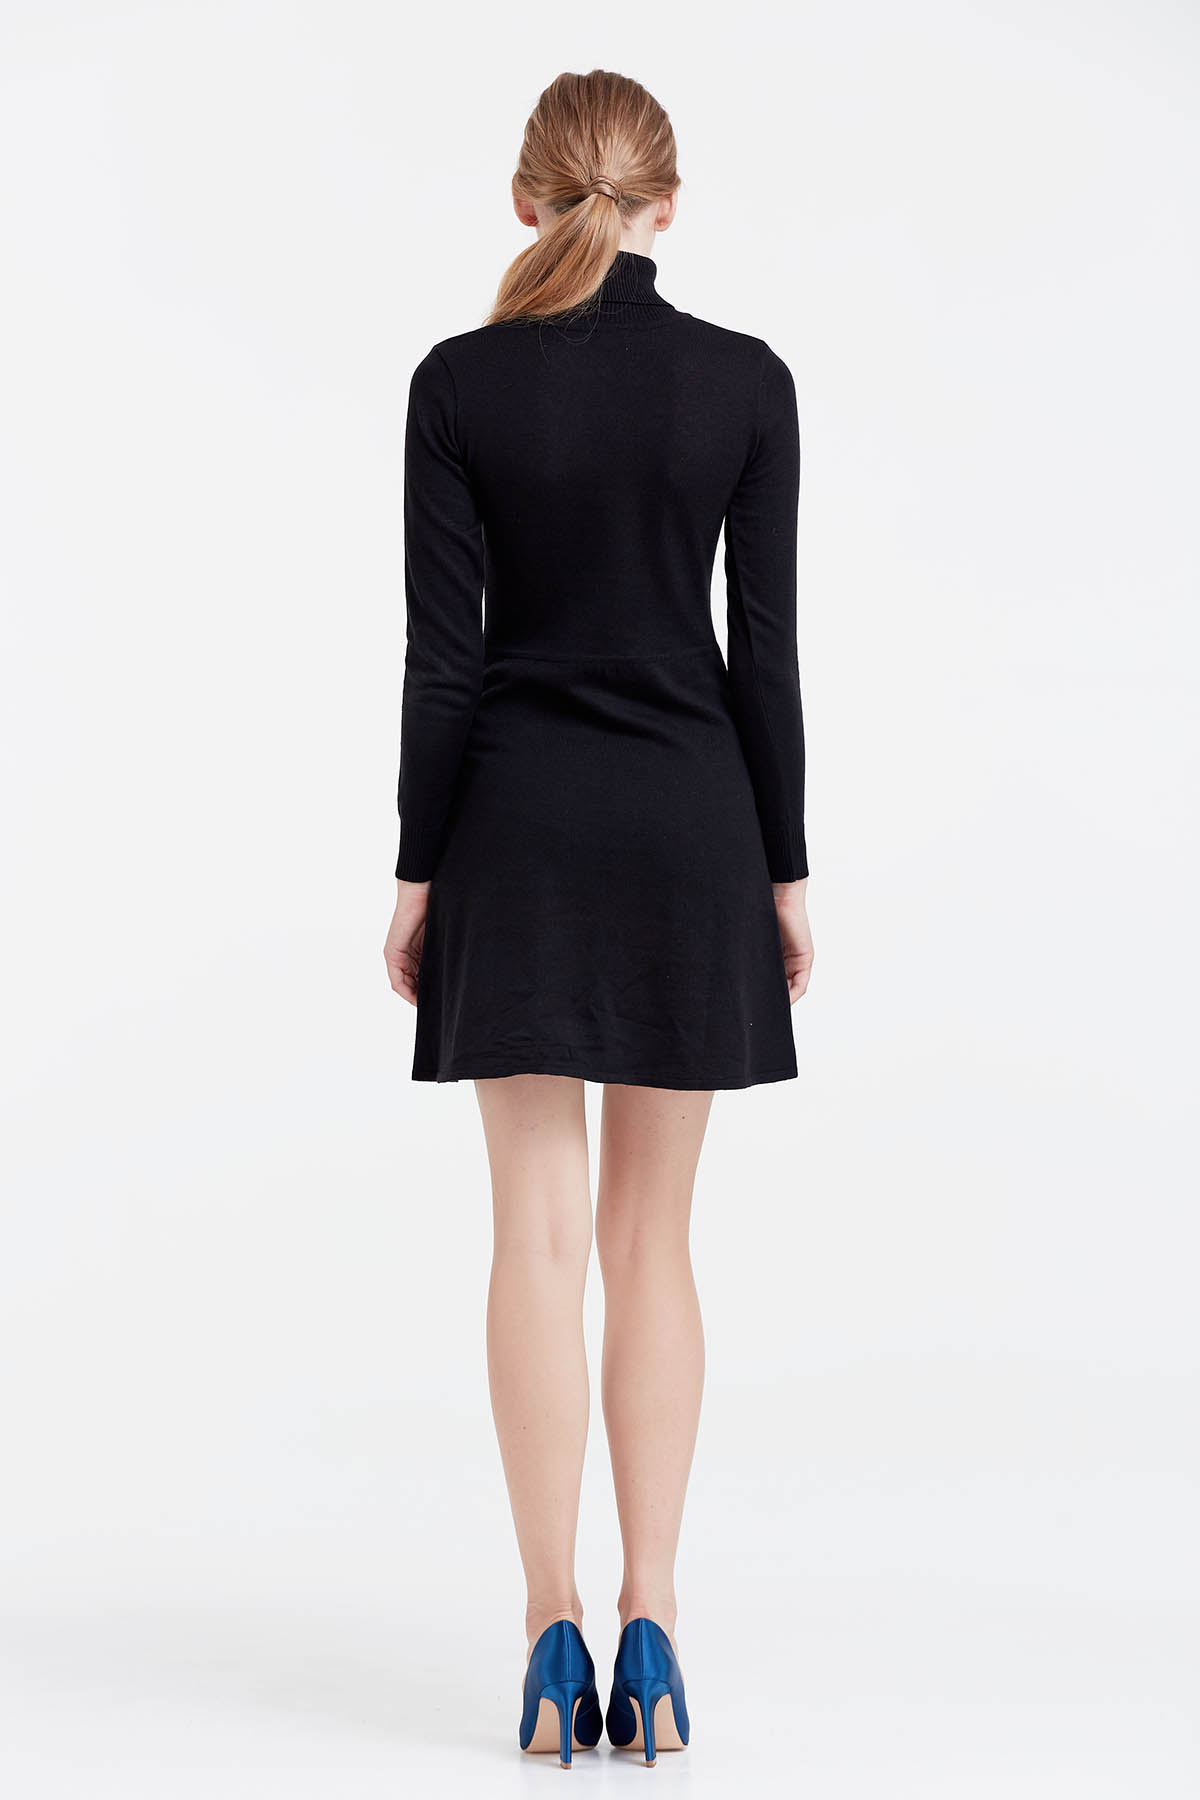 Black knitted dress , photo 3